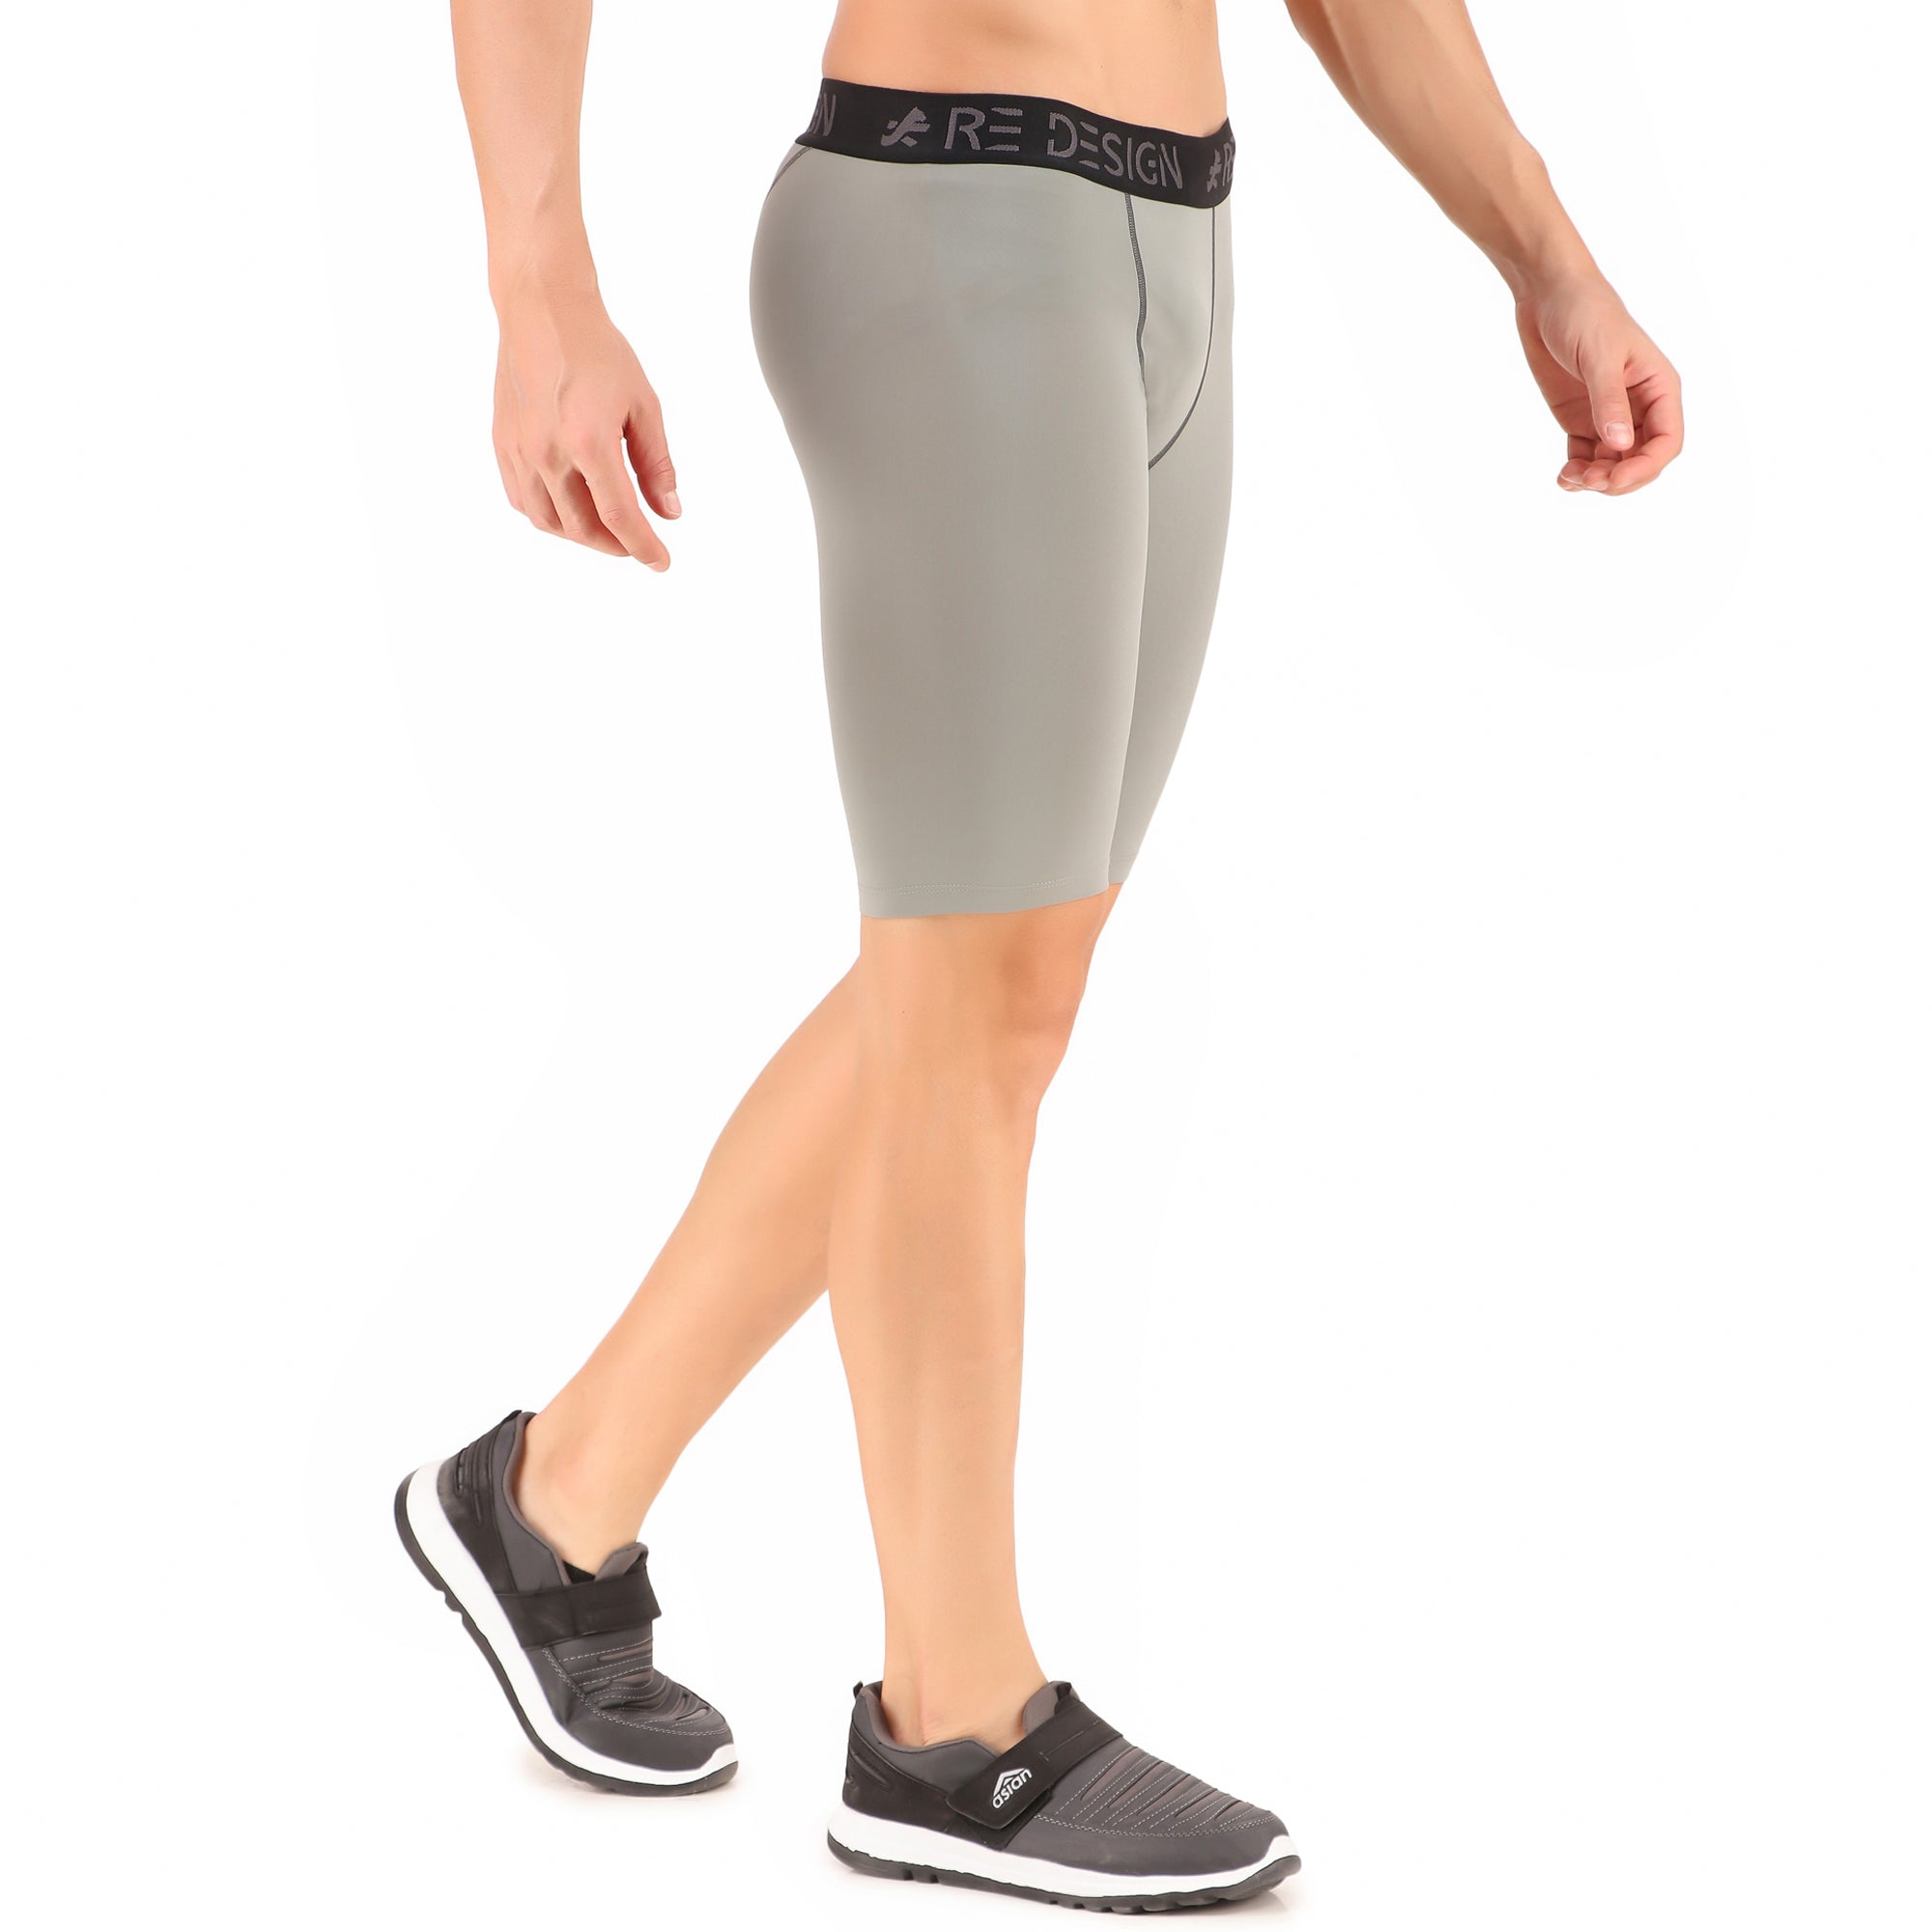 Nylon Compression Shorts and Half Tights For Men (Light Grey)